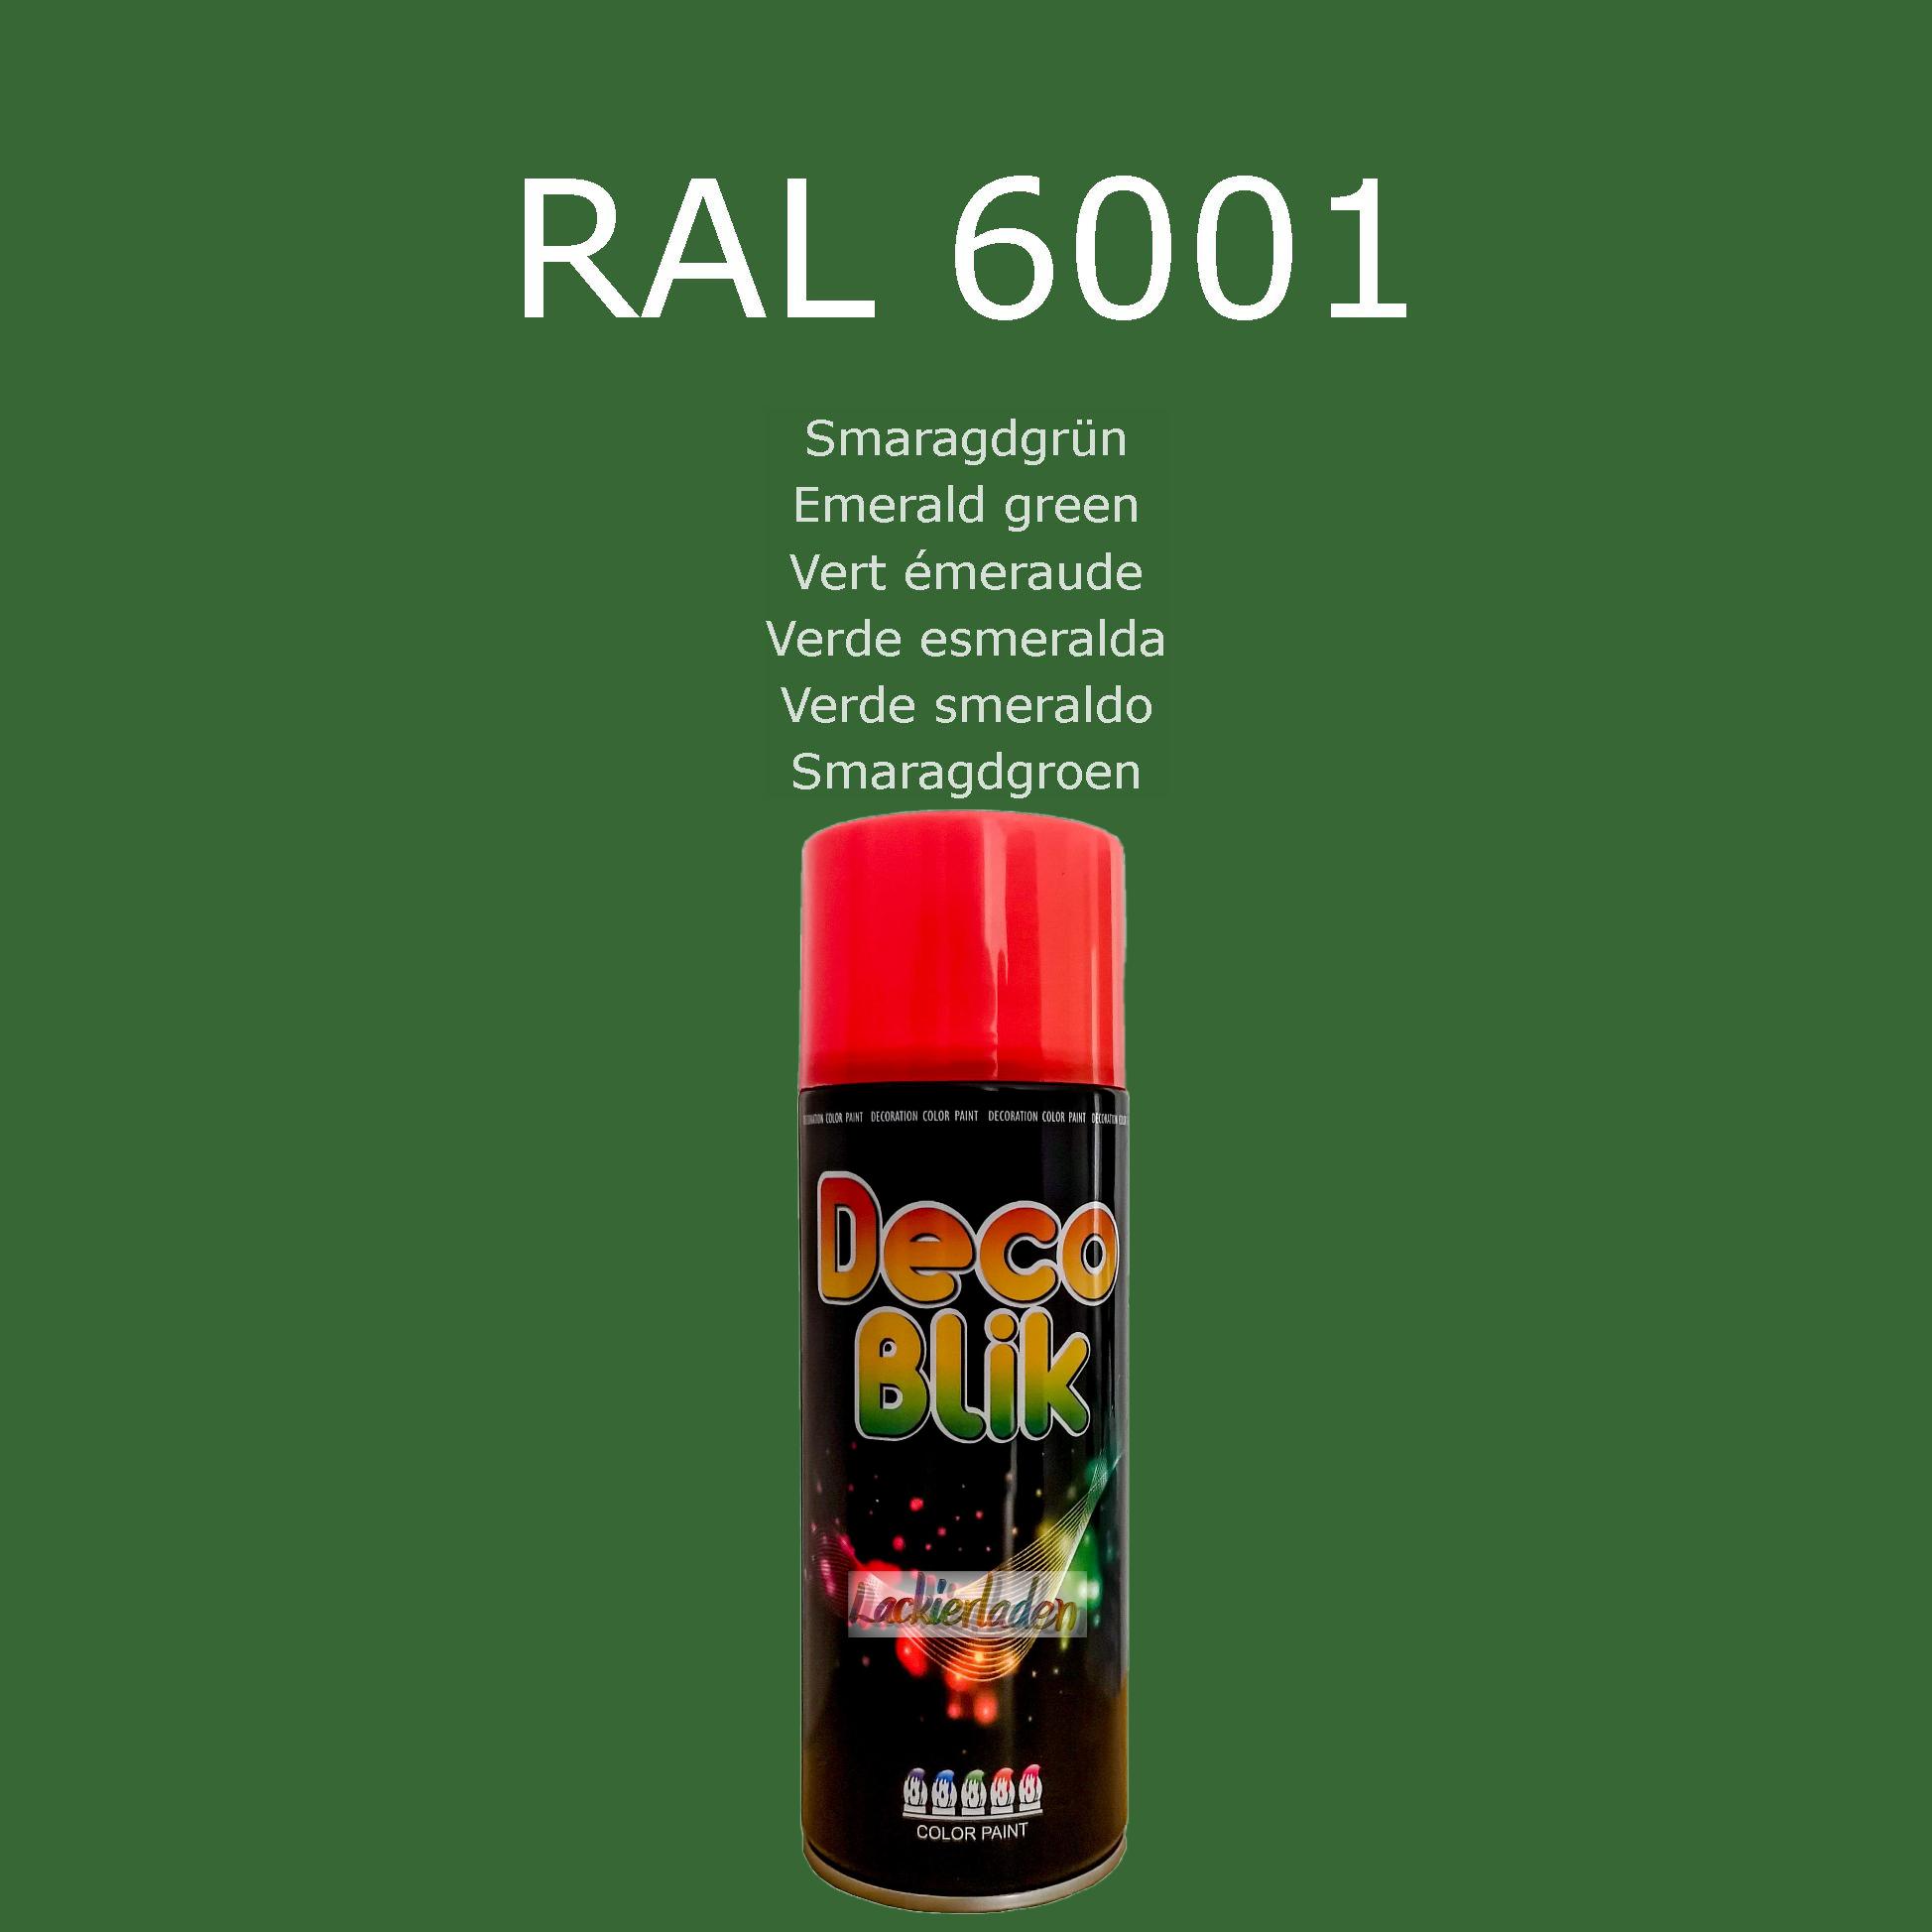 Zollex Decolack Spraydose 400 ml RAL 6001 Smaragdgrün Emerald green Vert émeraude Verde esmeralda Verde smeraldo Smaragdgroen | Dekolack Lackspray Sprüh Dose